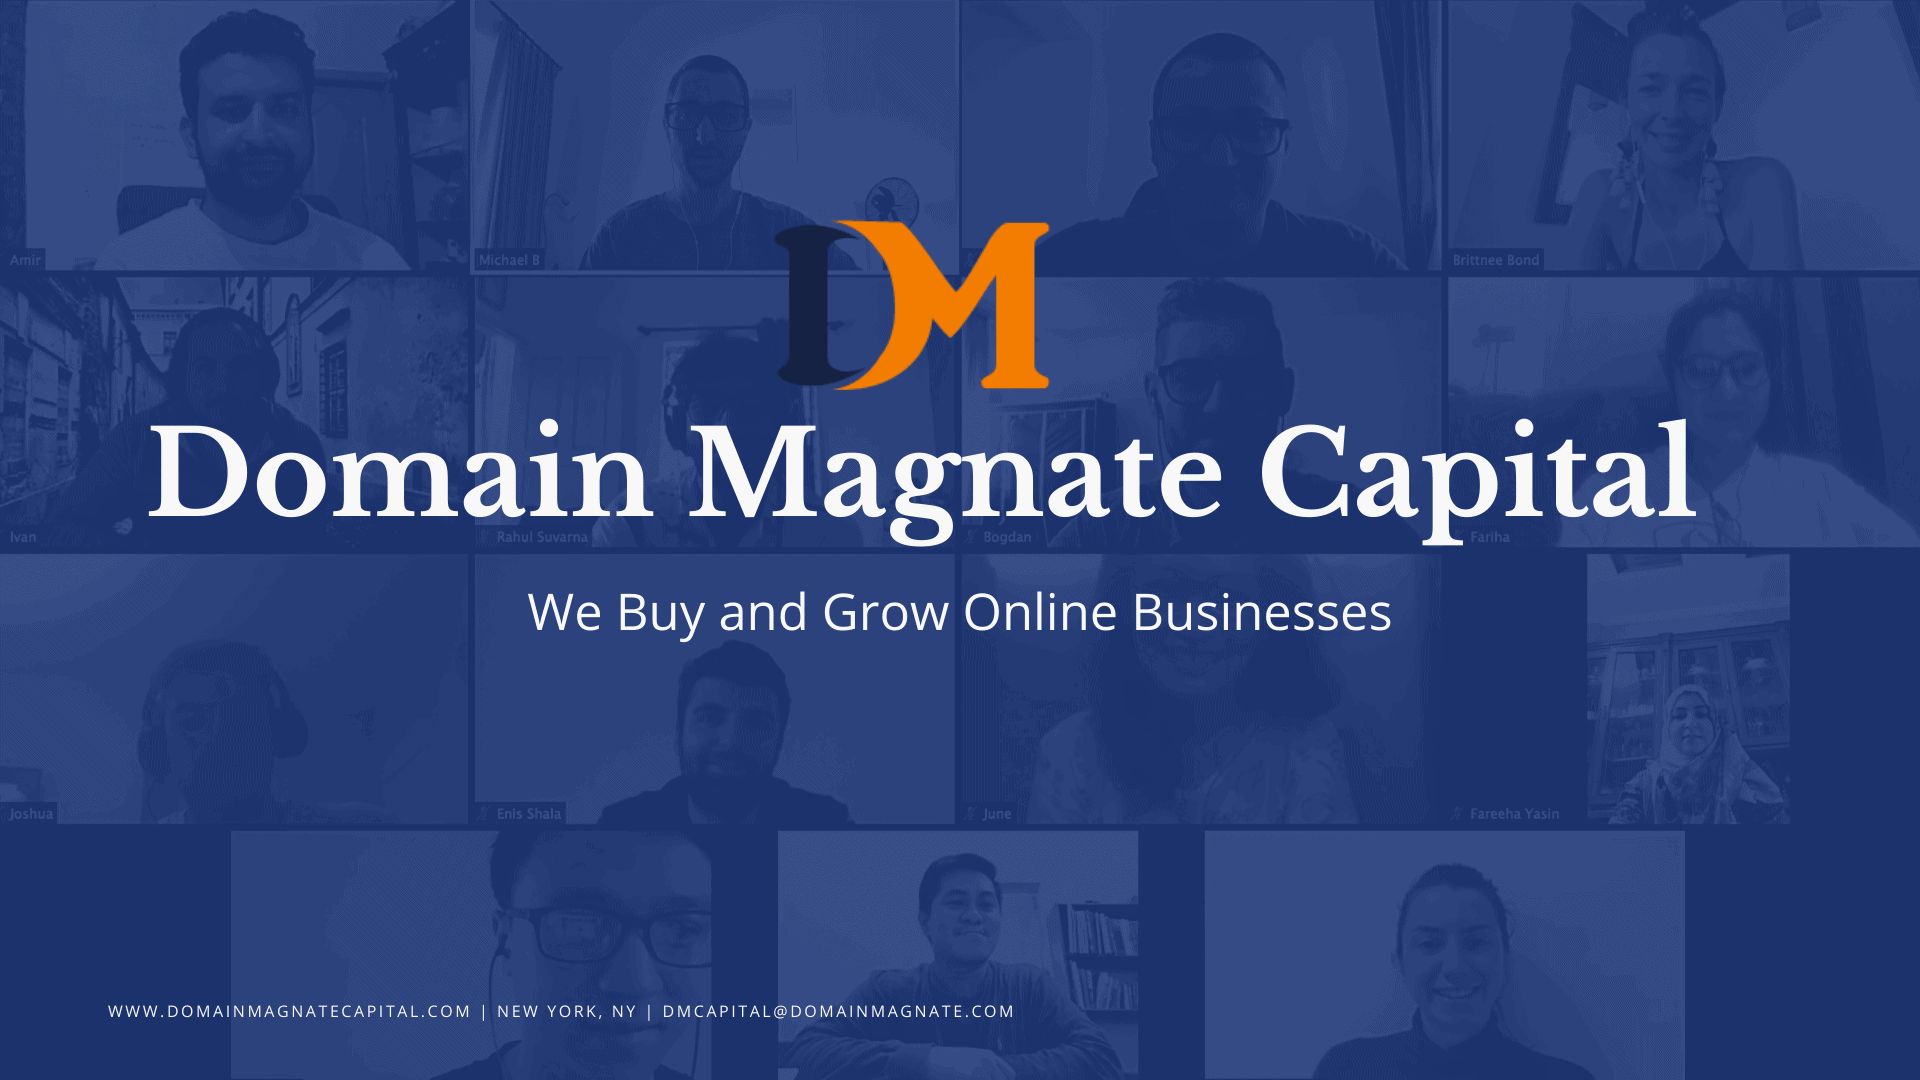 Domain Magnate Capital